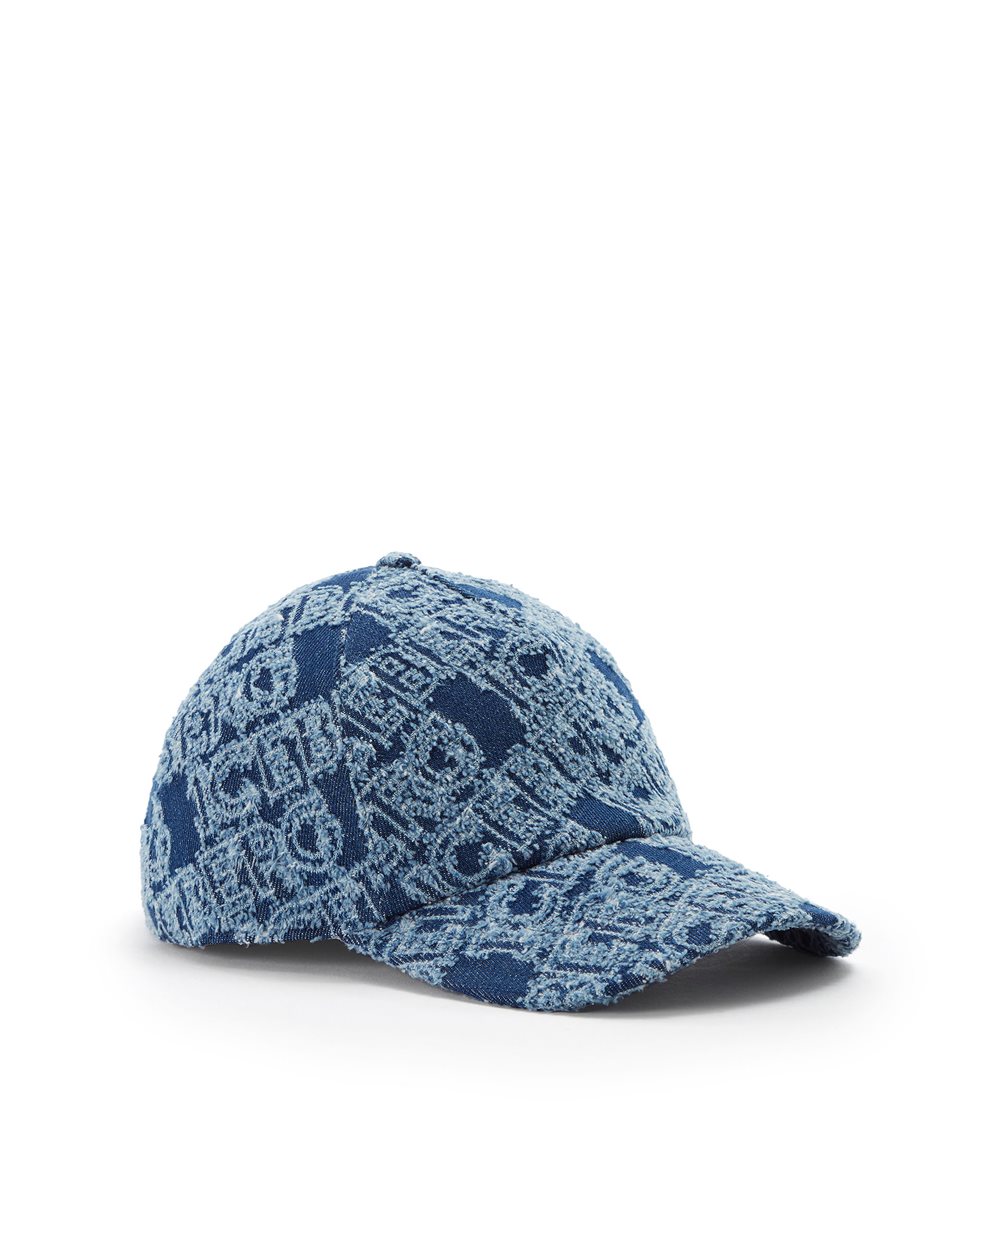 Baseball hat with logo - Hats  | Iceberg - Official Website